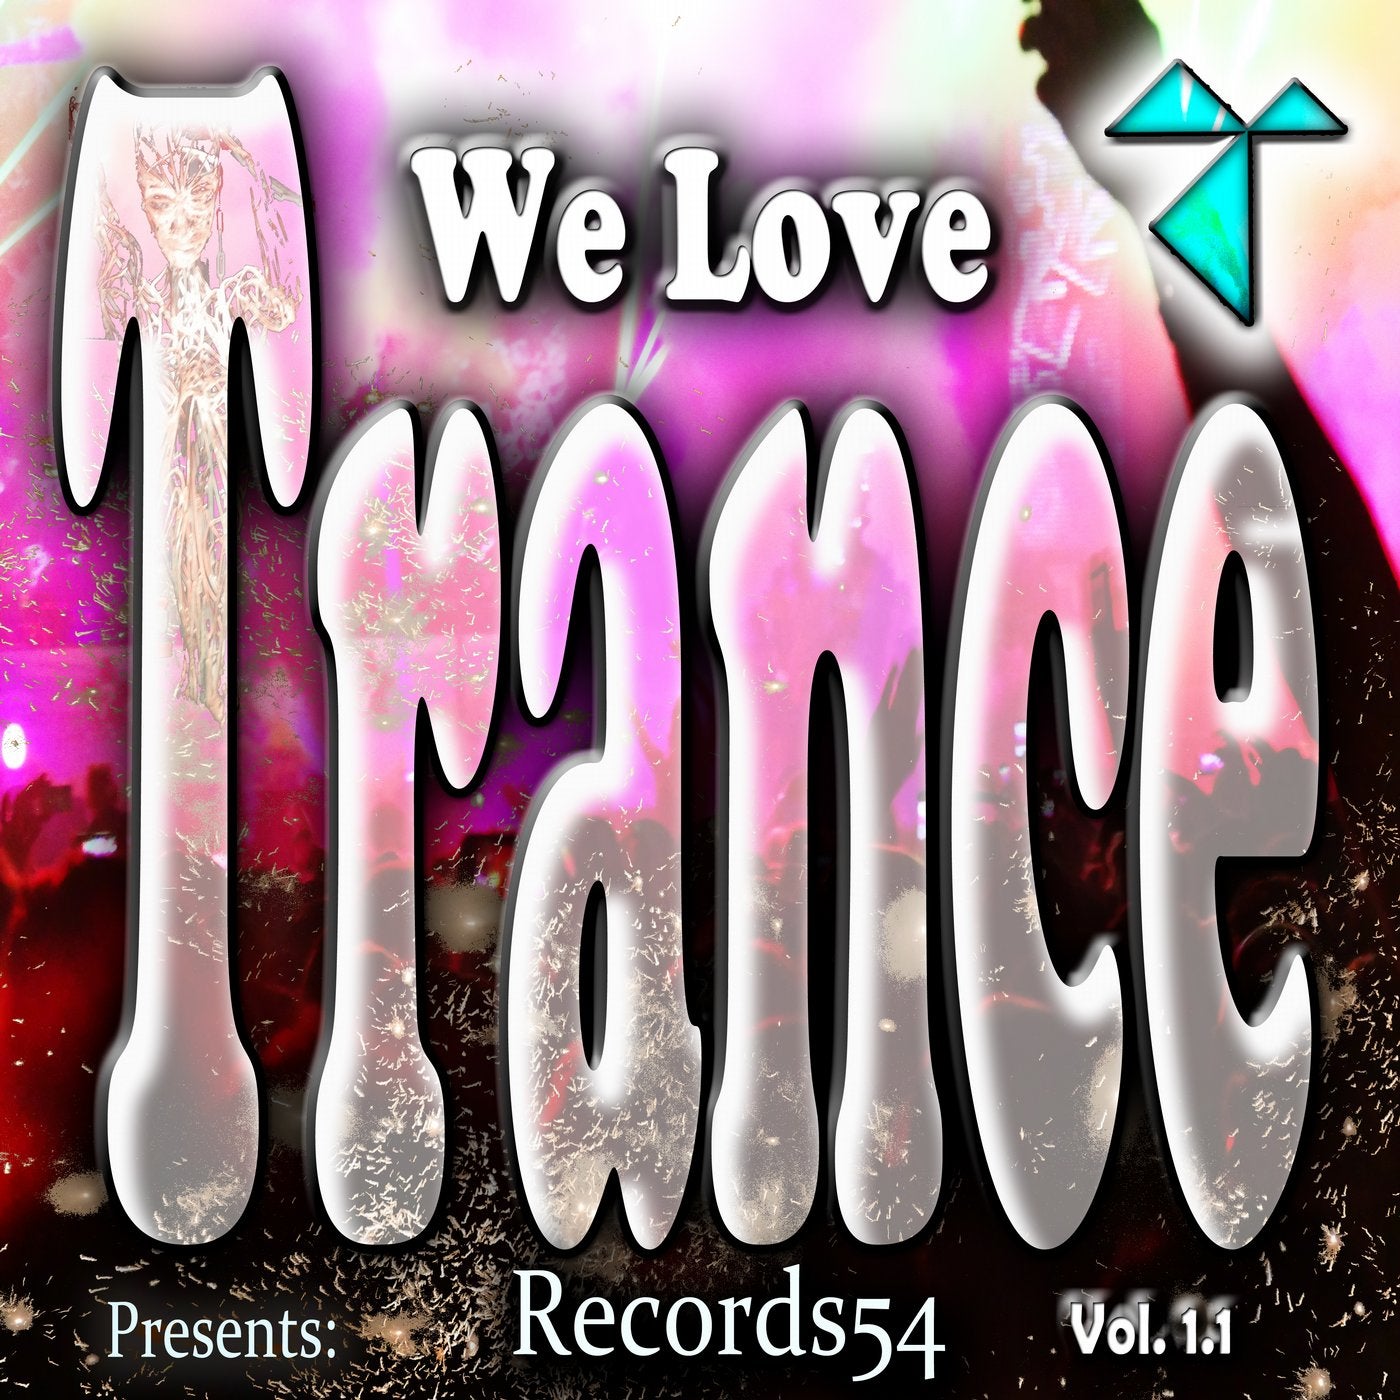 Records54 Presents: We Love Trance, Vol. 1.1